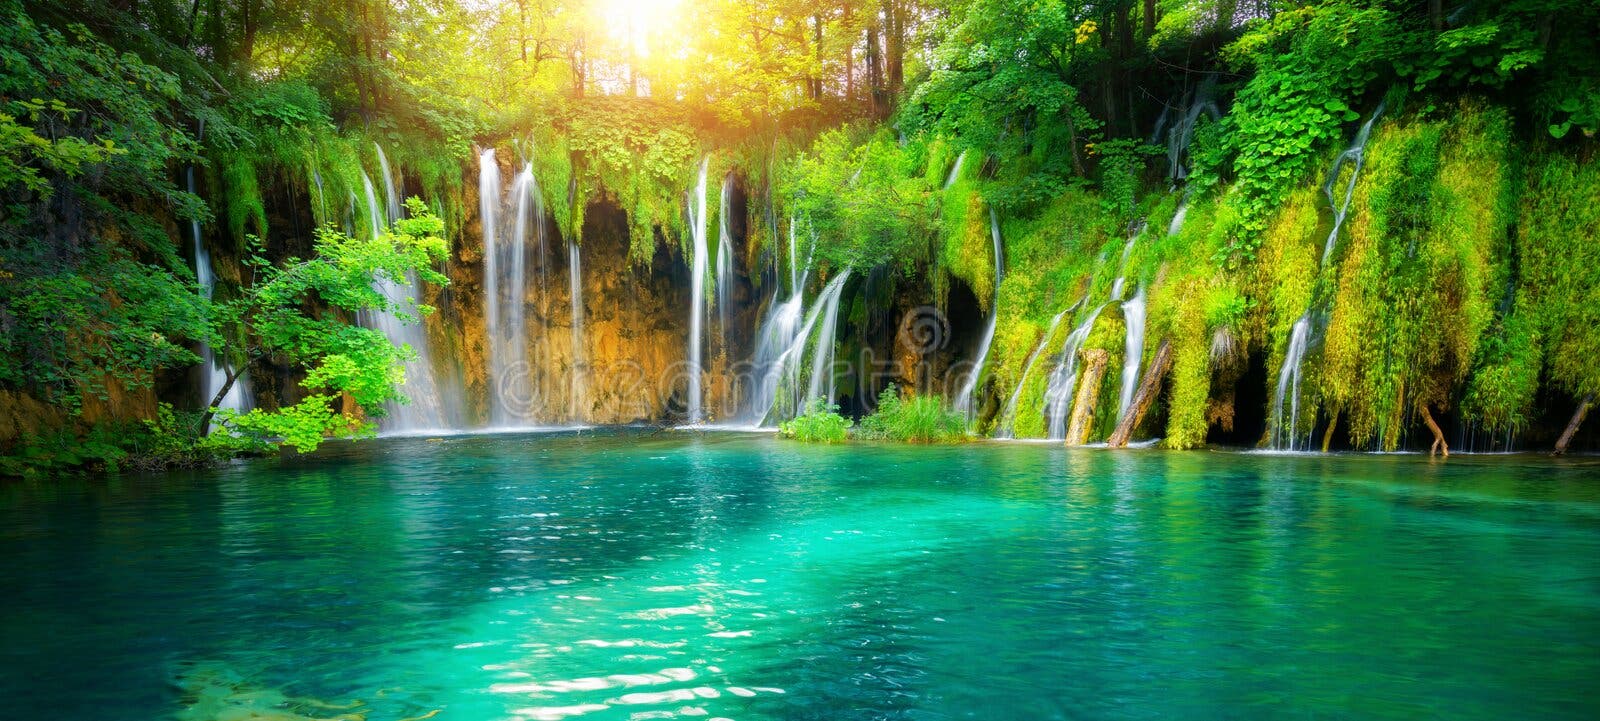 Waterfall Landscape of Plitvice Lakes Croatia Stock Image - Image ...